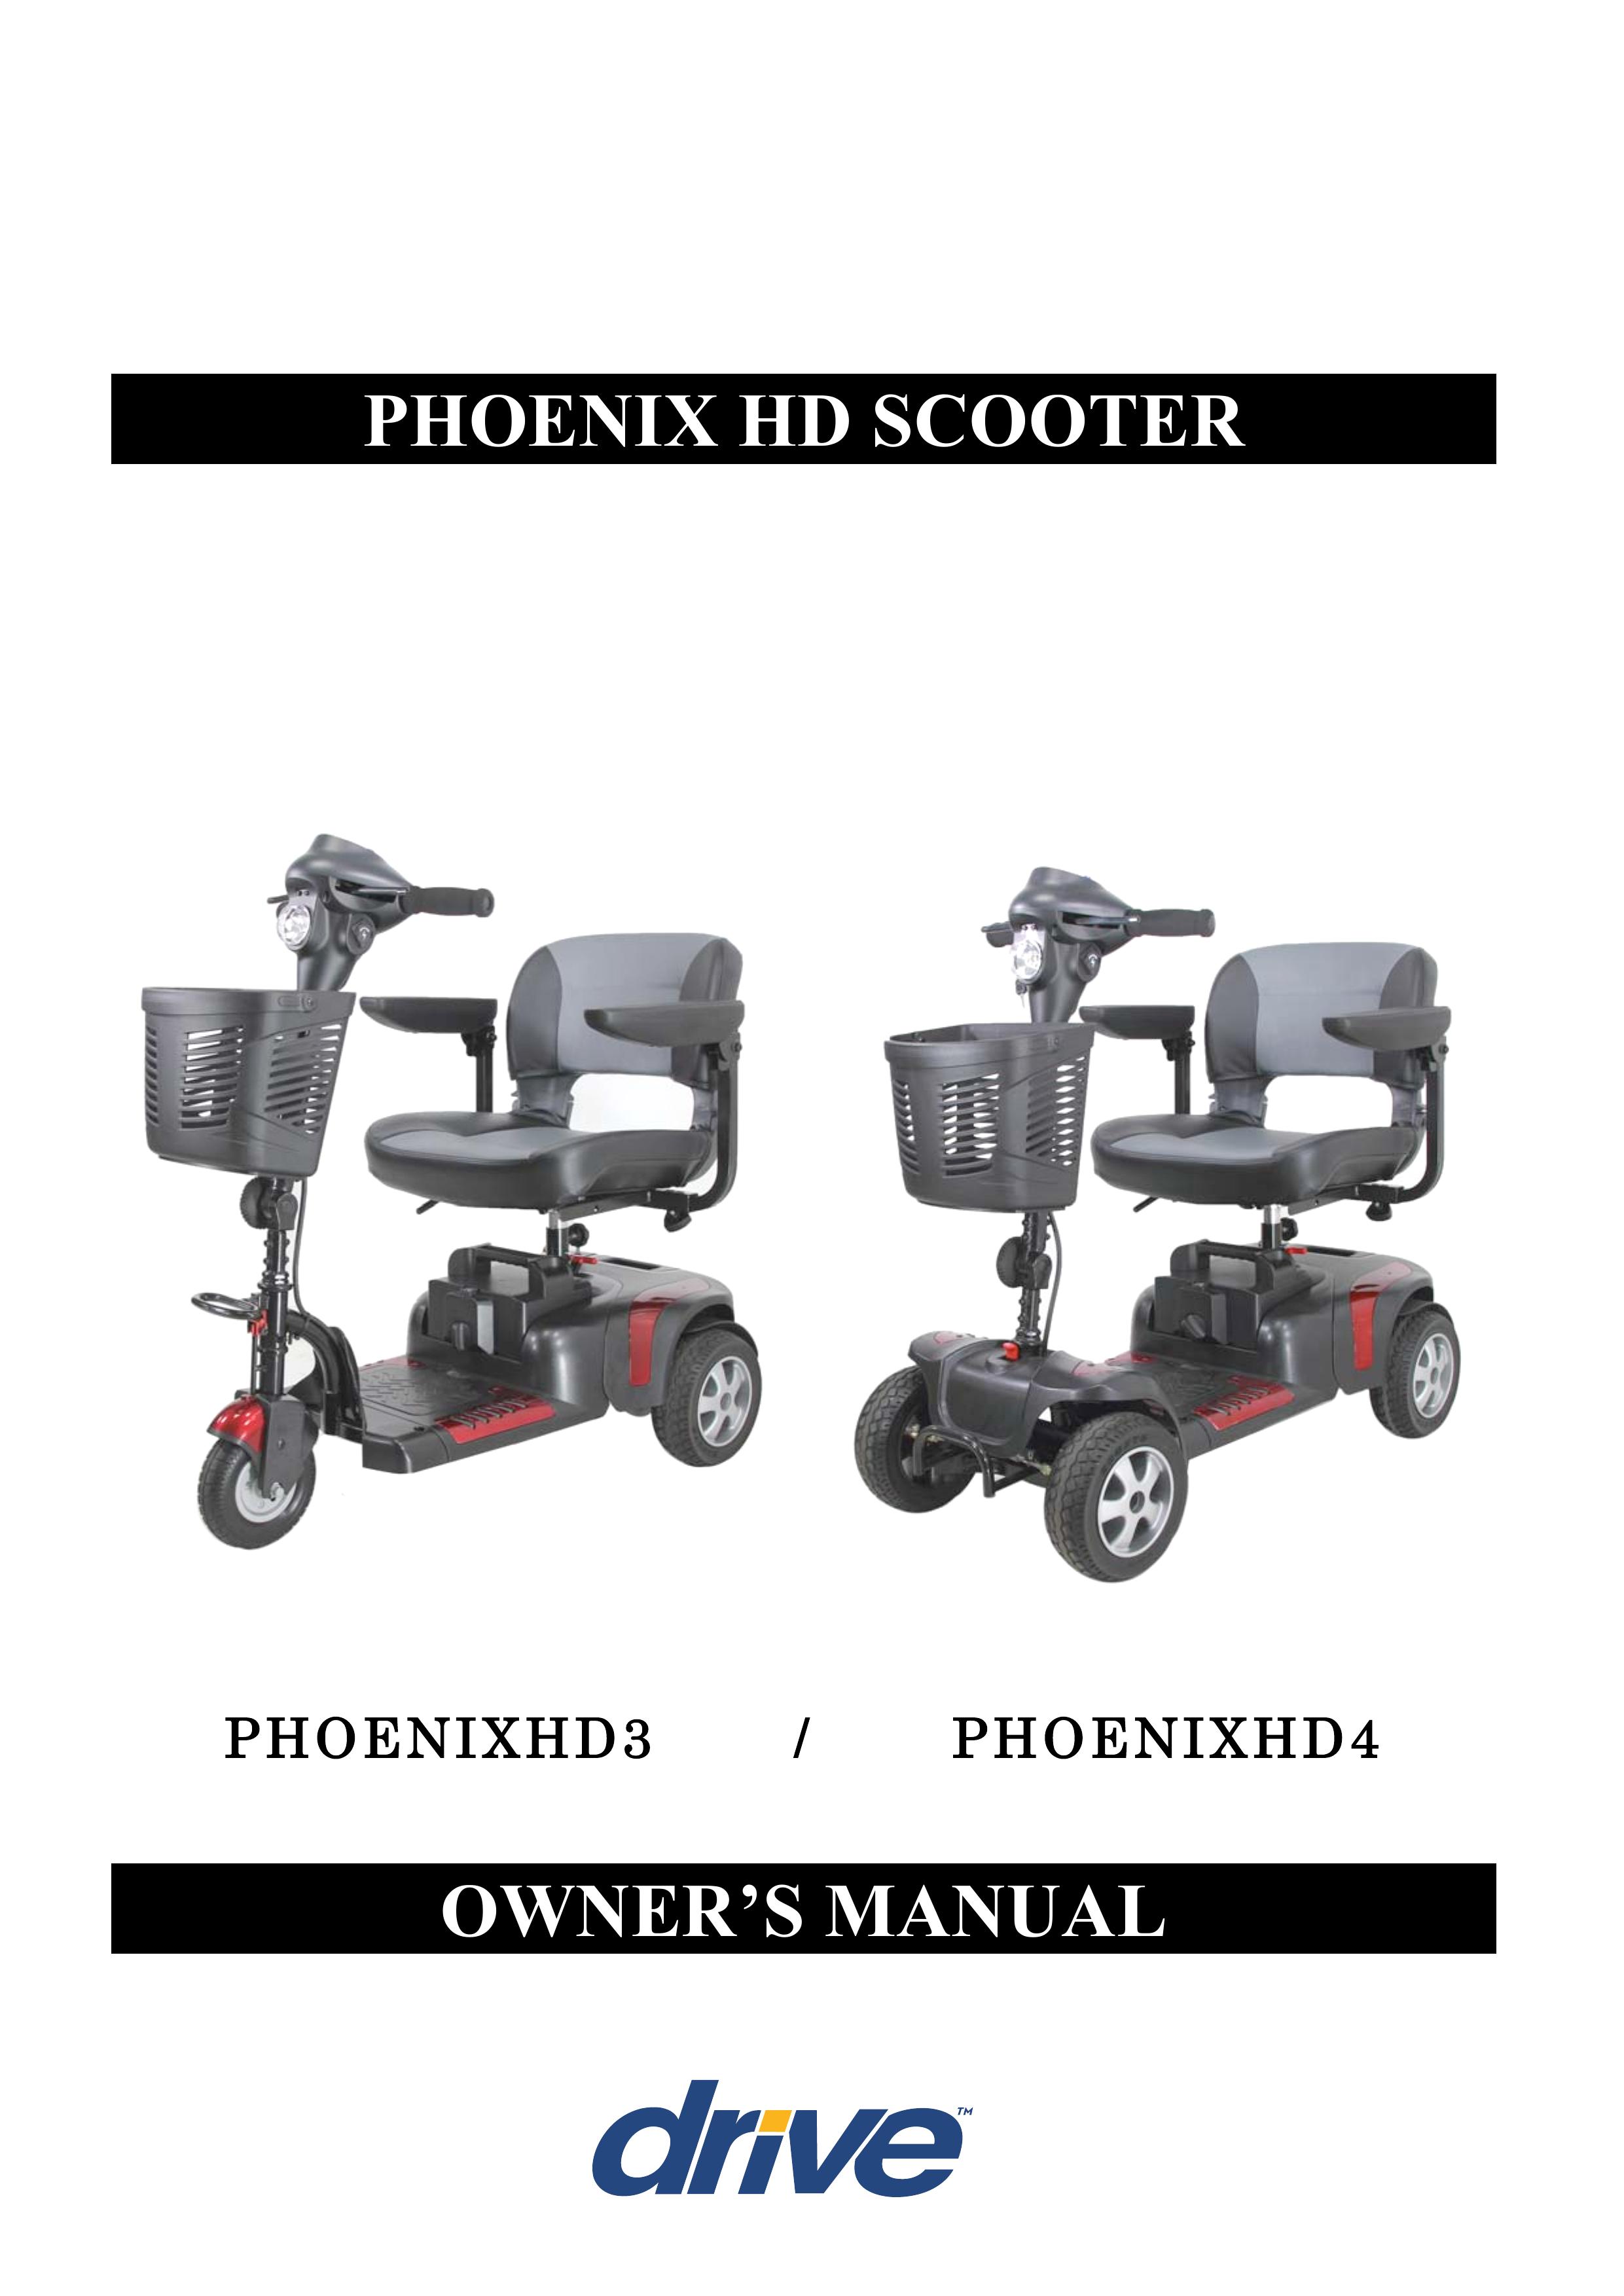 Drive Medical Design PhoenixHD4 Mobility Aid User Manual